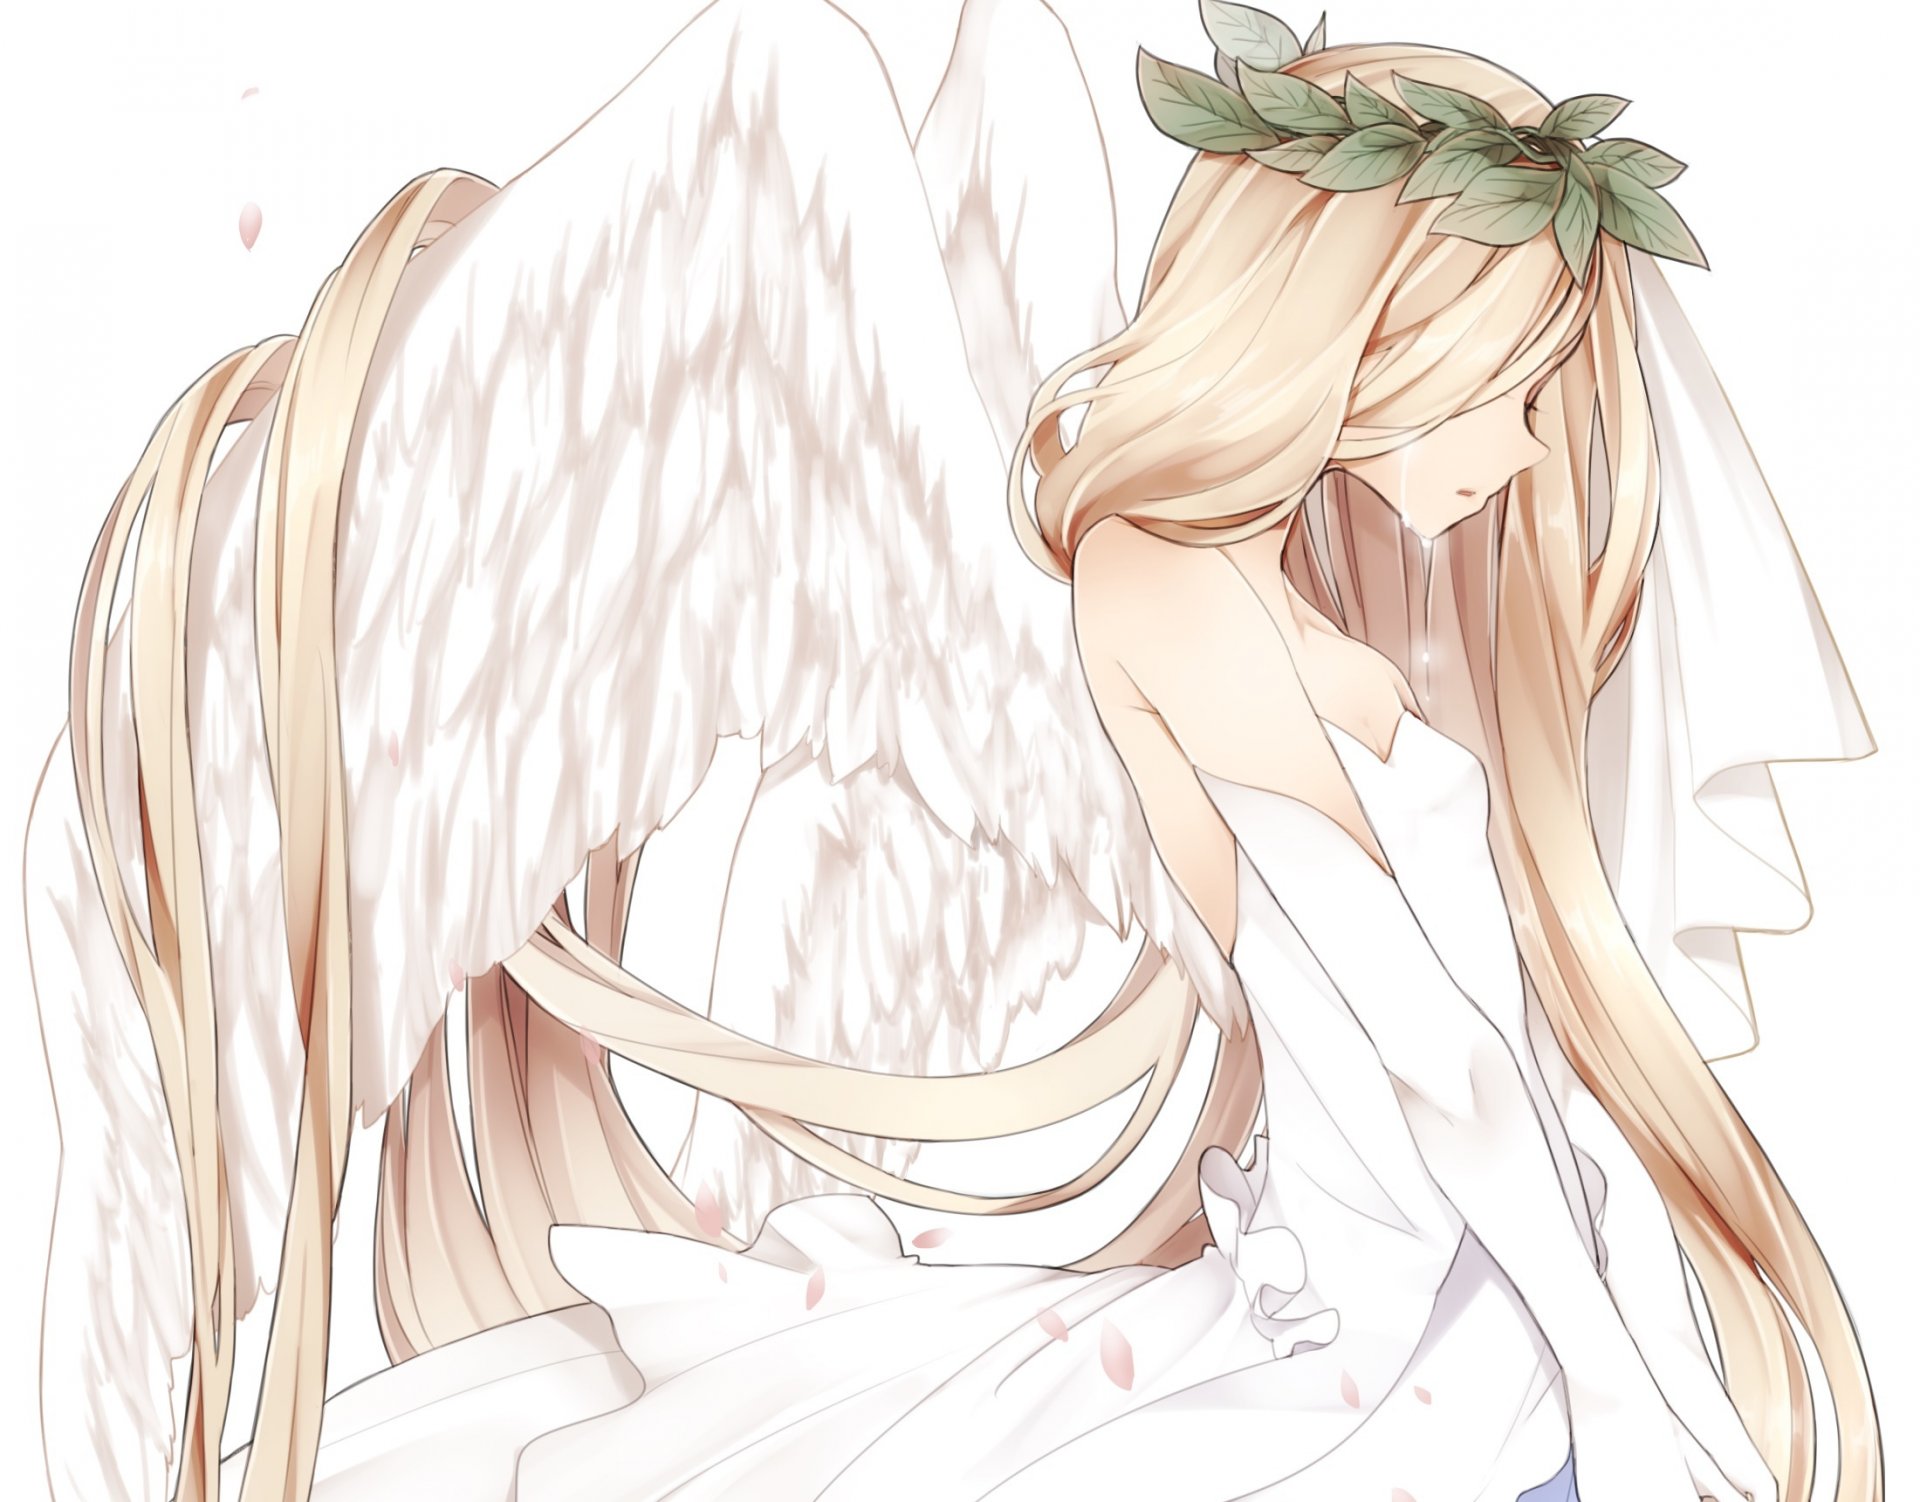 art naruto maki girl angel wings tears wreath leaves anime petals sakura